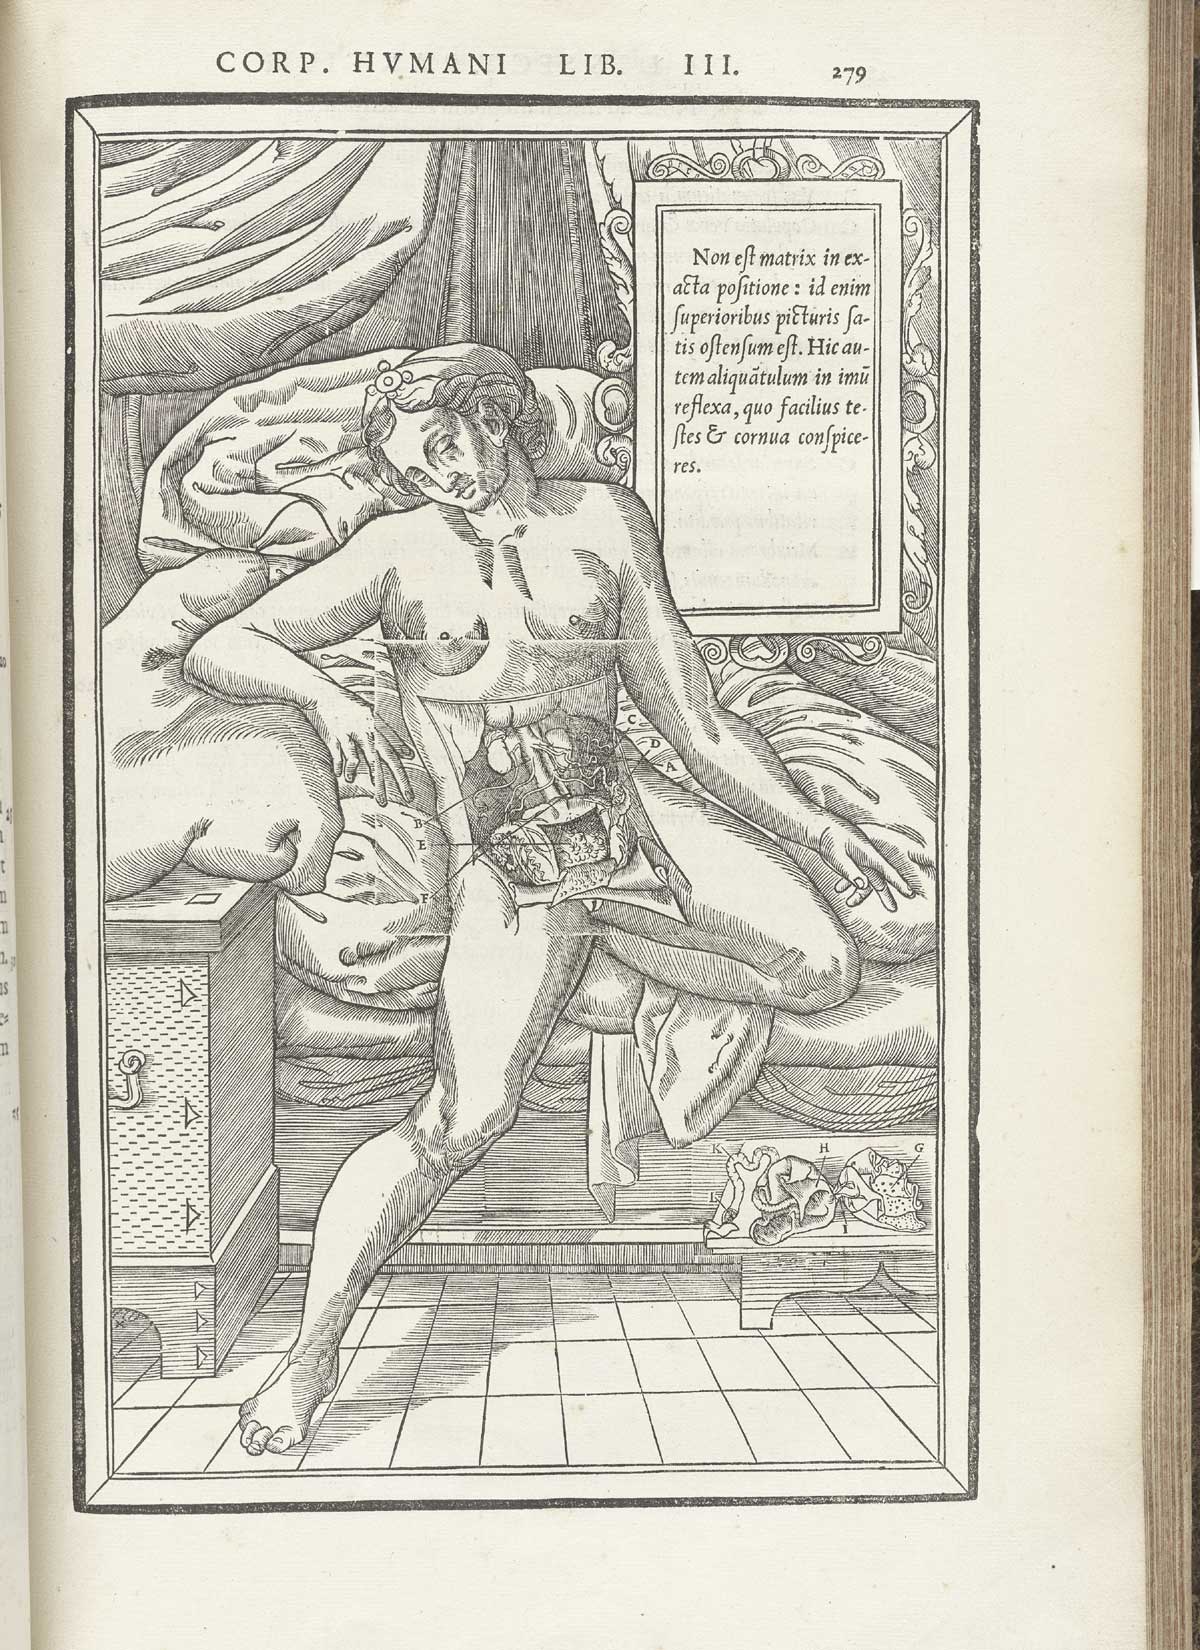 Pregnant female figure, from Charles Estienne’s De dissection partium corporis humani libri tres, NLM Call no.: WZ 240 E81dd 1545.